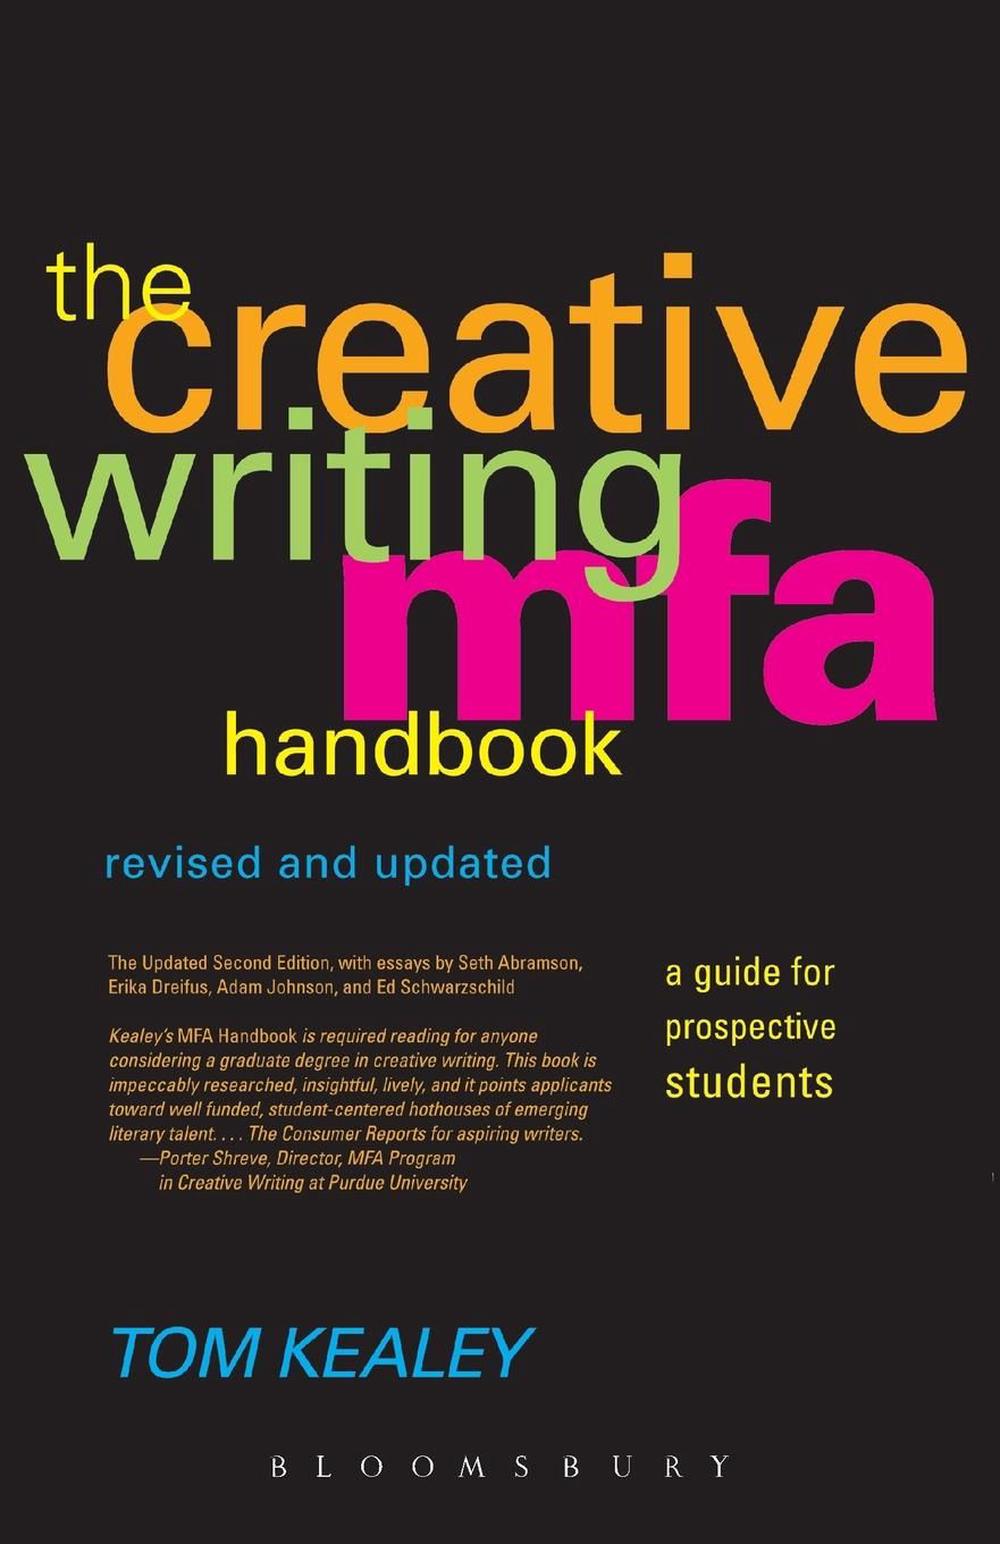 mit creative writing mfa